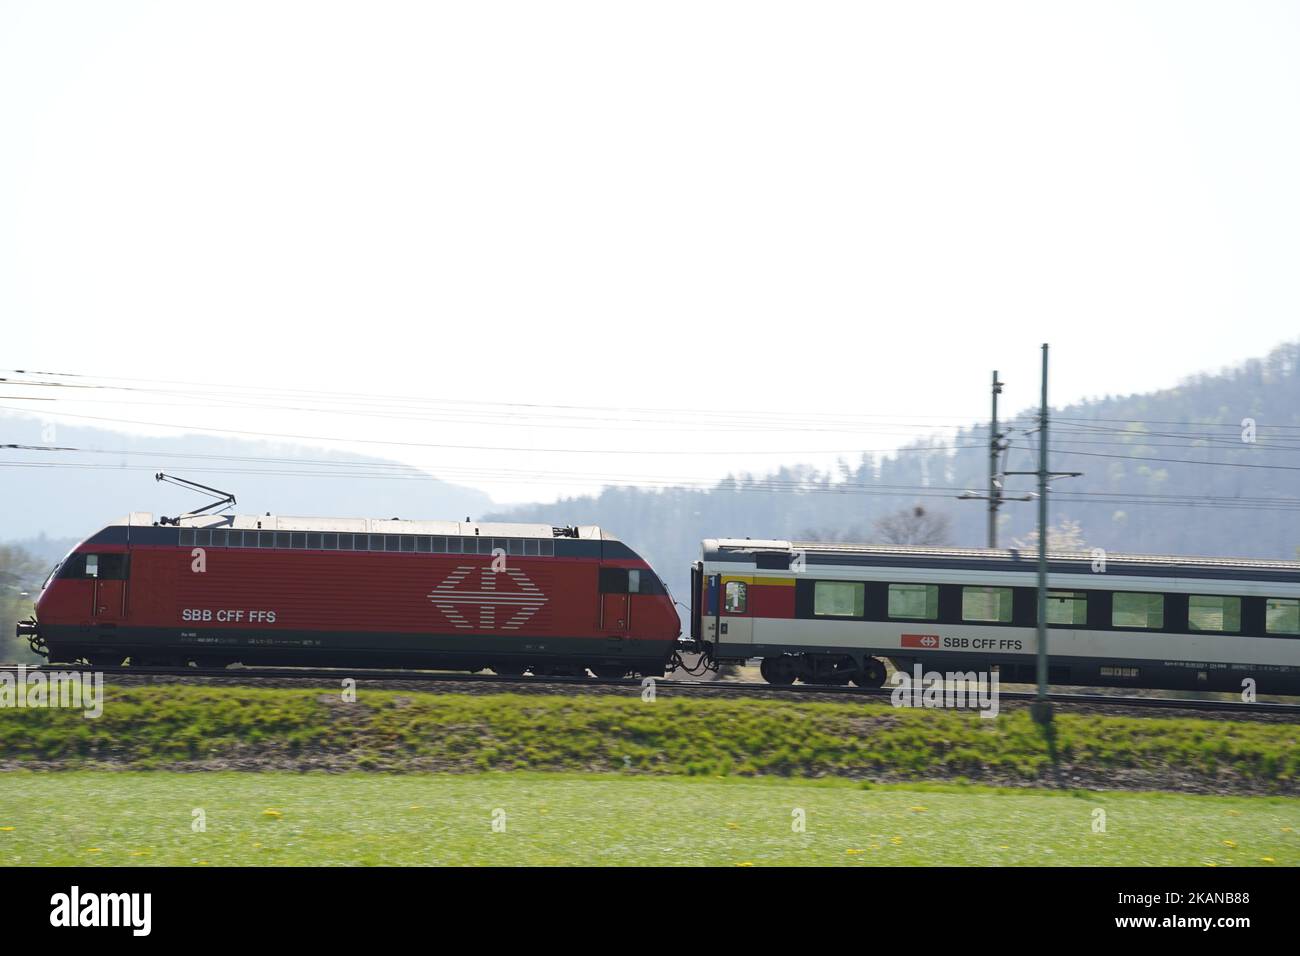 The SBB Train at Sissach in Switzerland Stock Photo